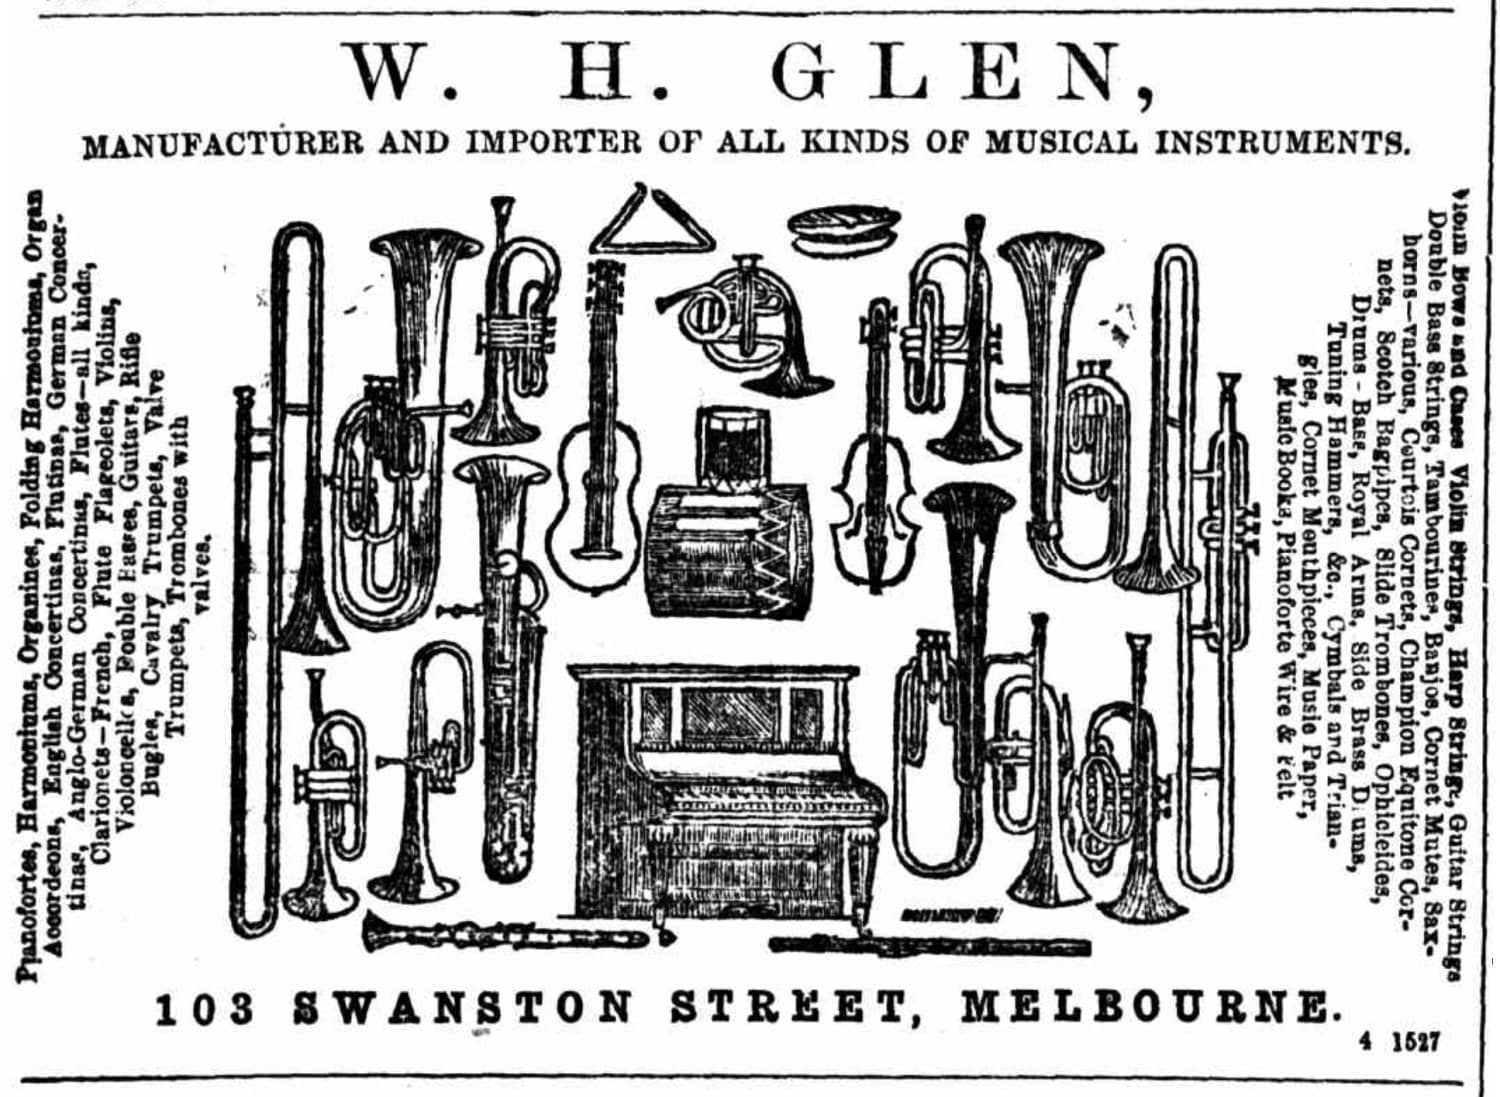 W. H. GLEN, [Advertisement], Leader (2 April 1864), 24